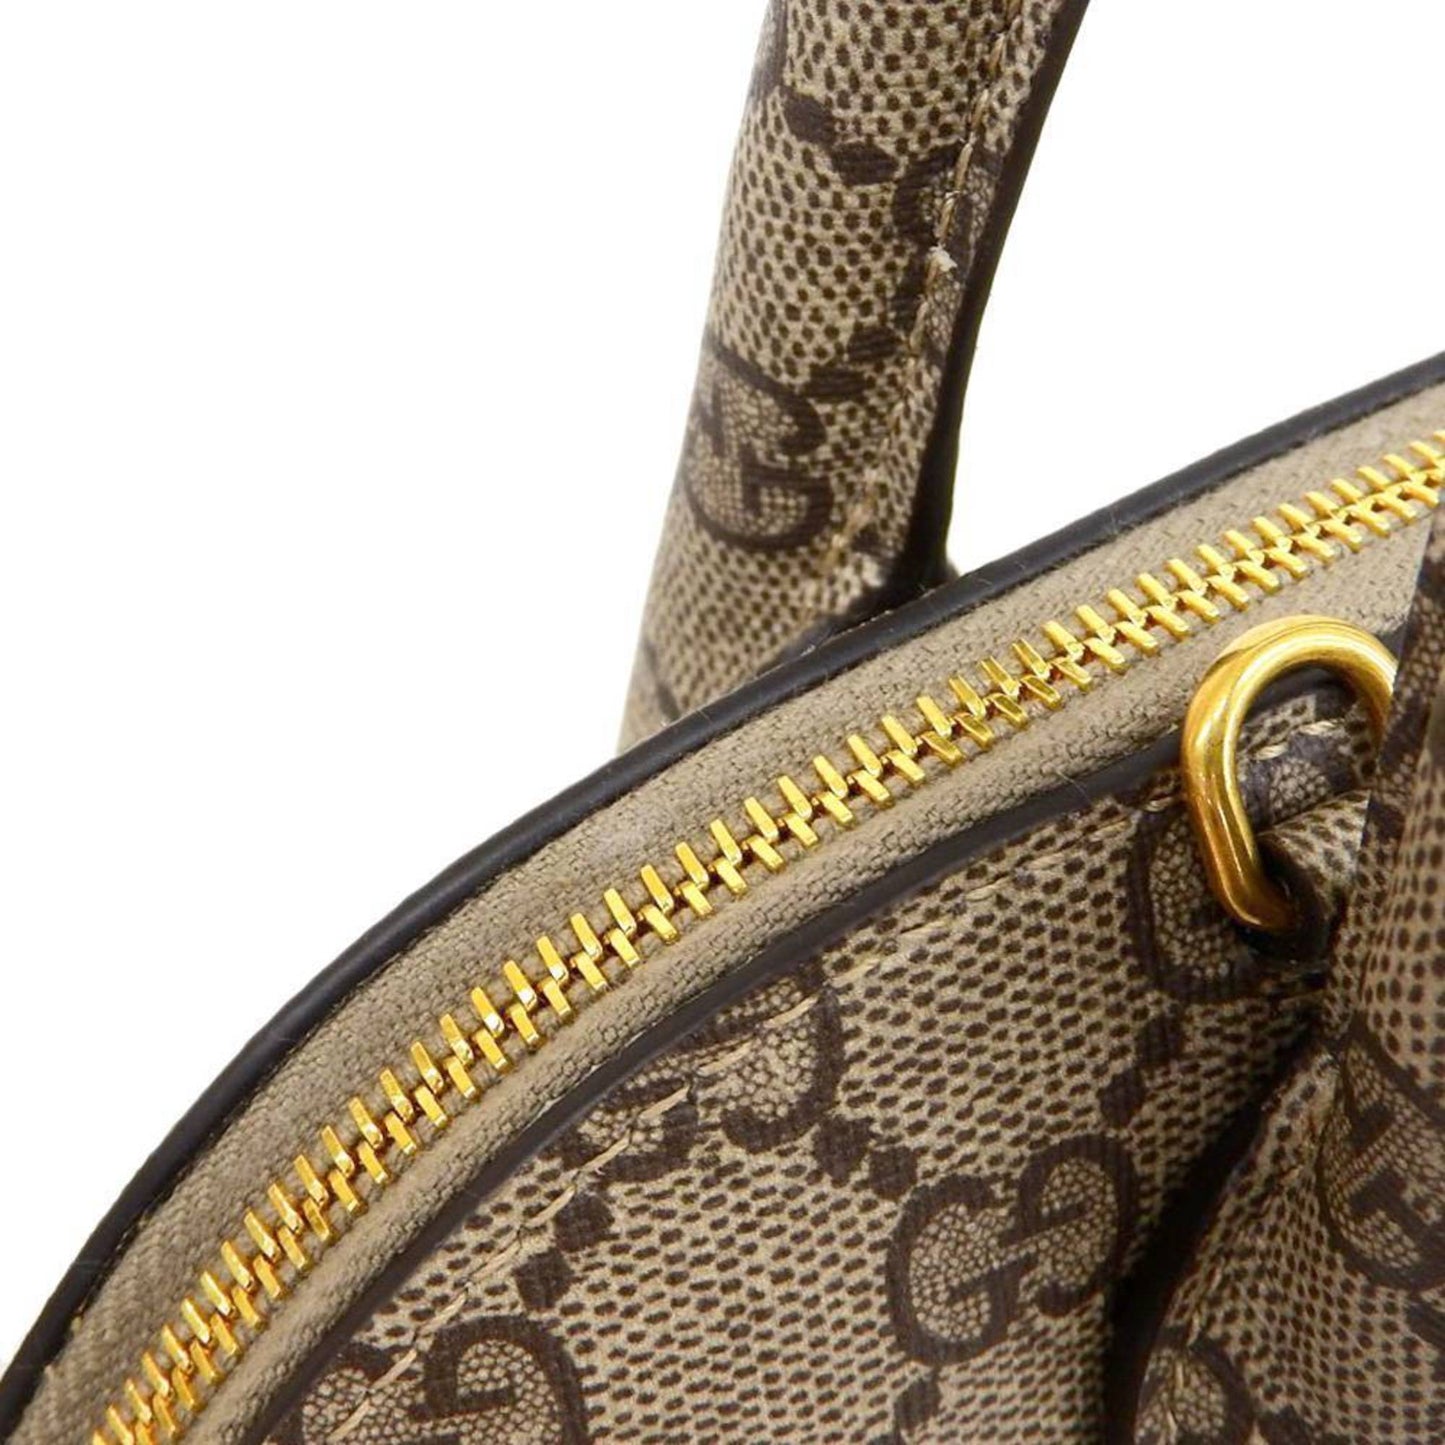 Gucci Women's Gucci Hacker Beige GG Supreme Handbag in Beige